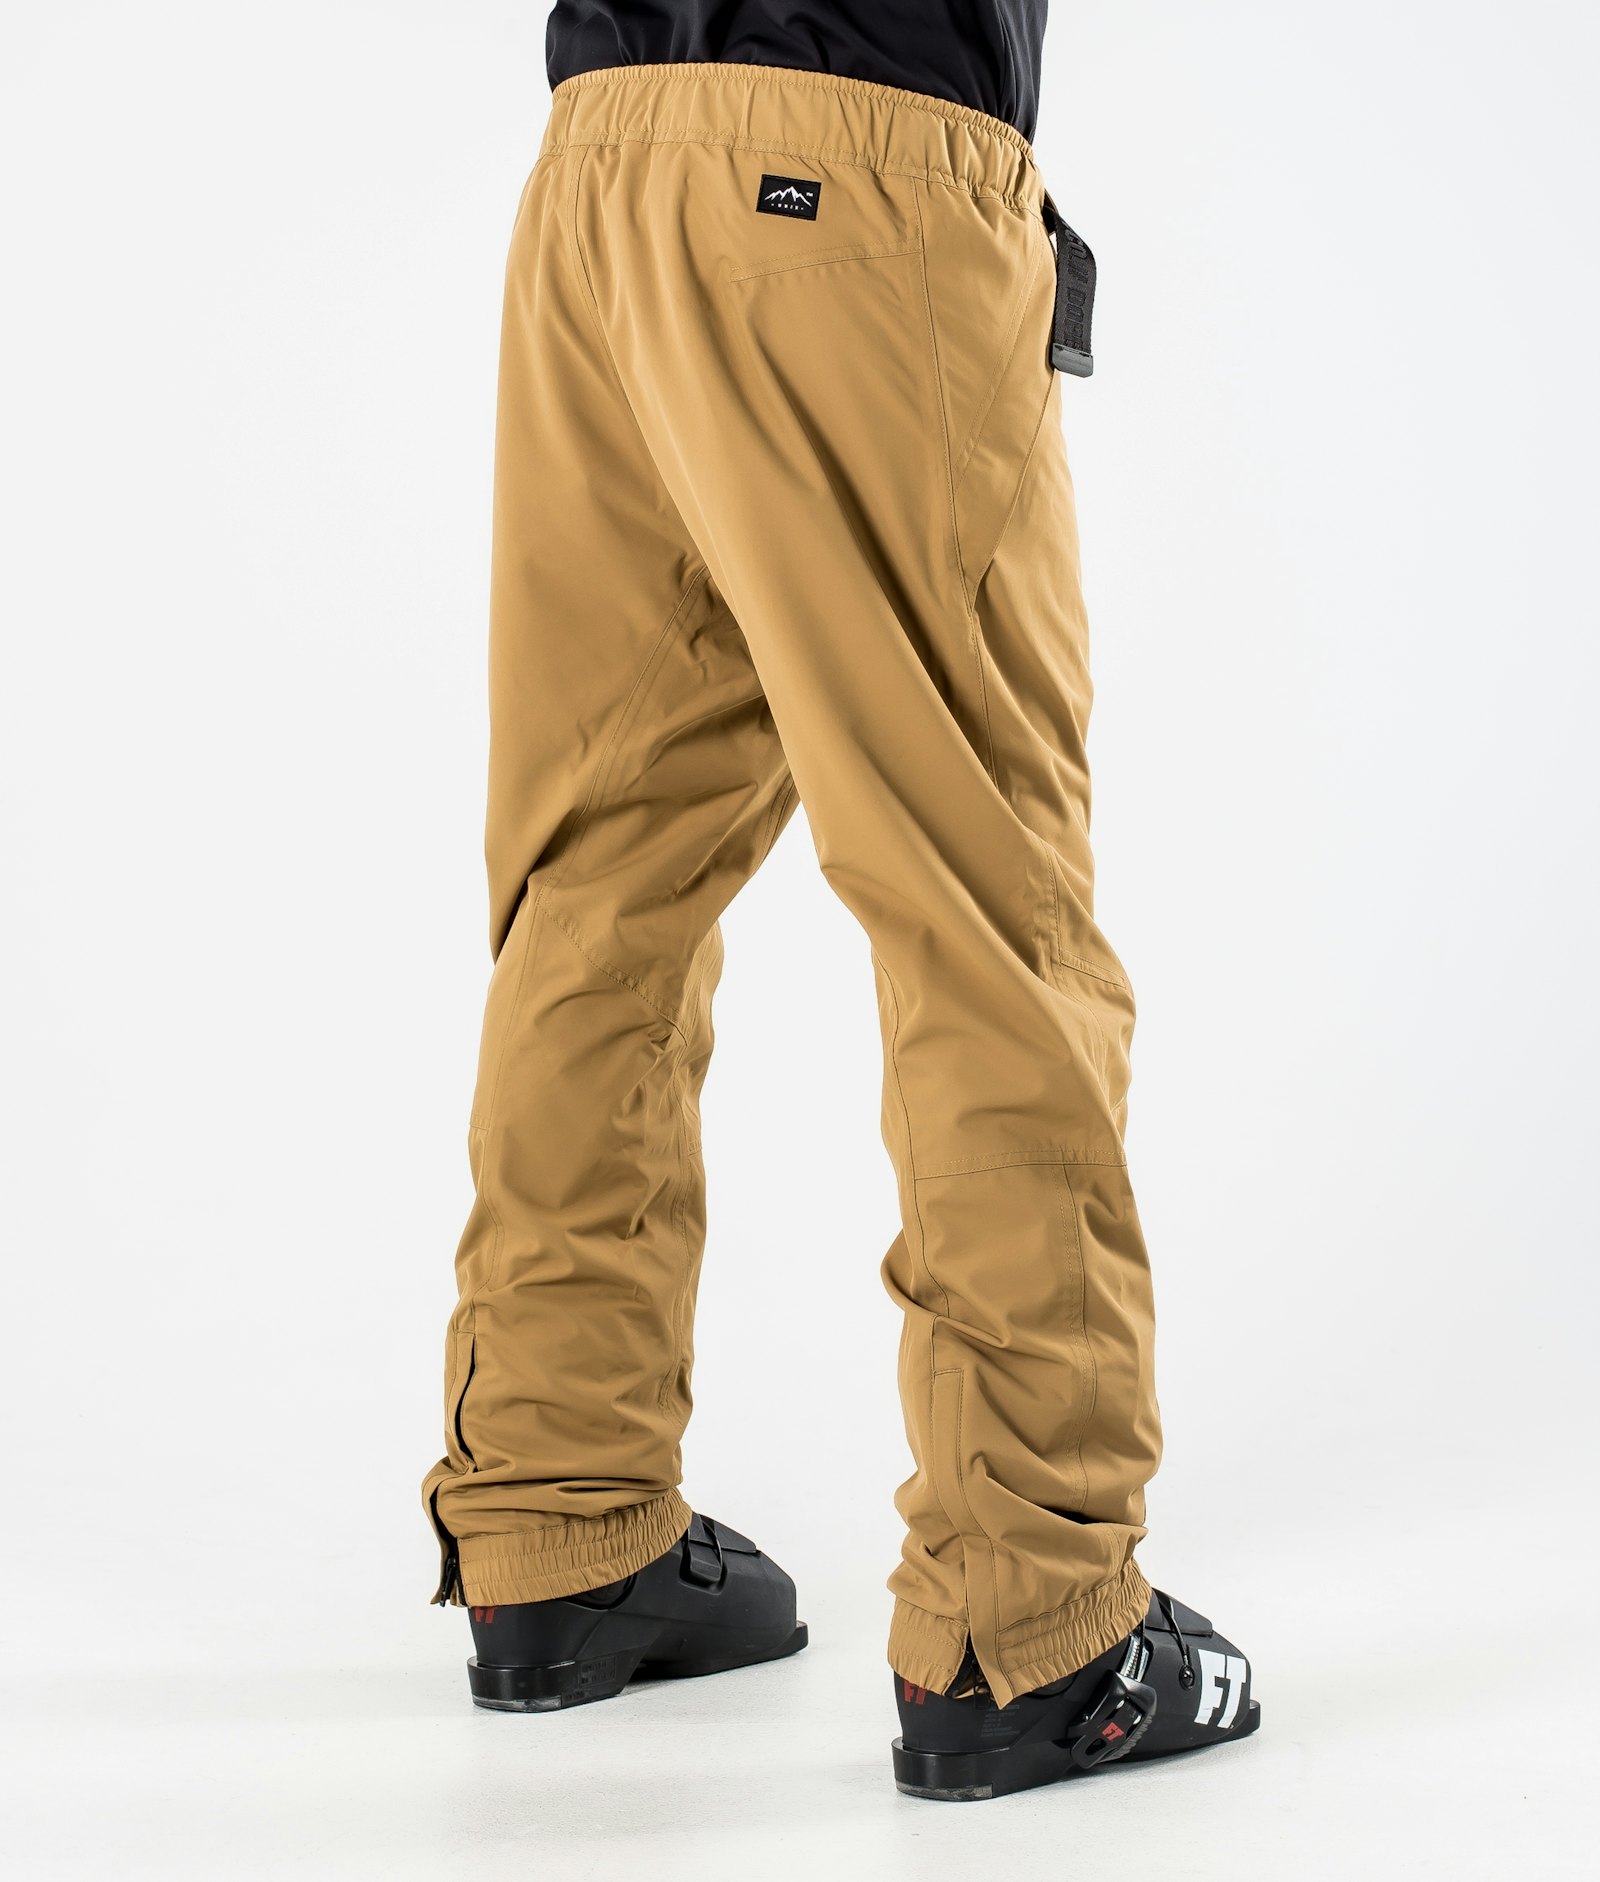 Blizzard 2020 Pantalon de Ski Homme Gold